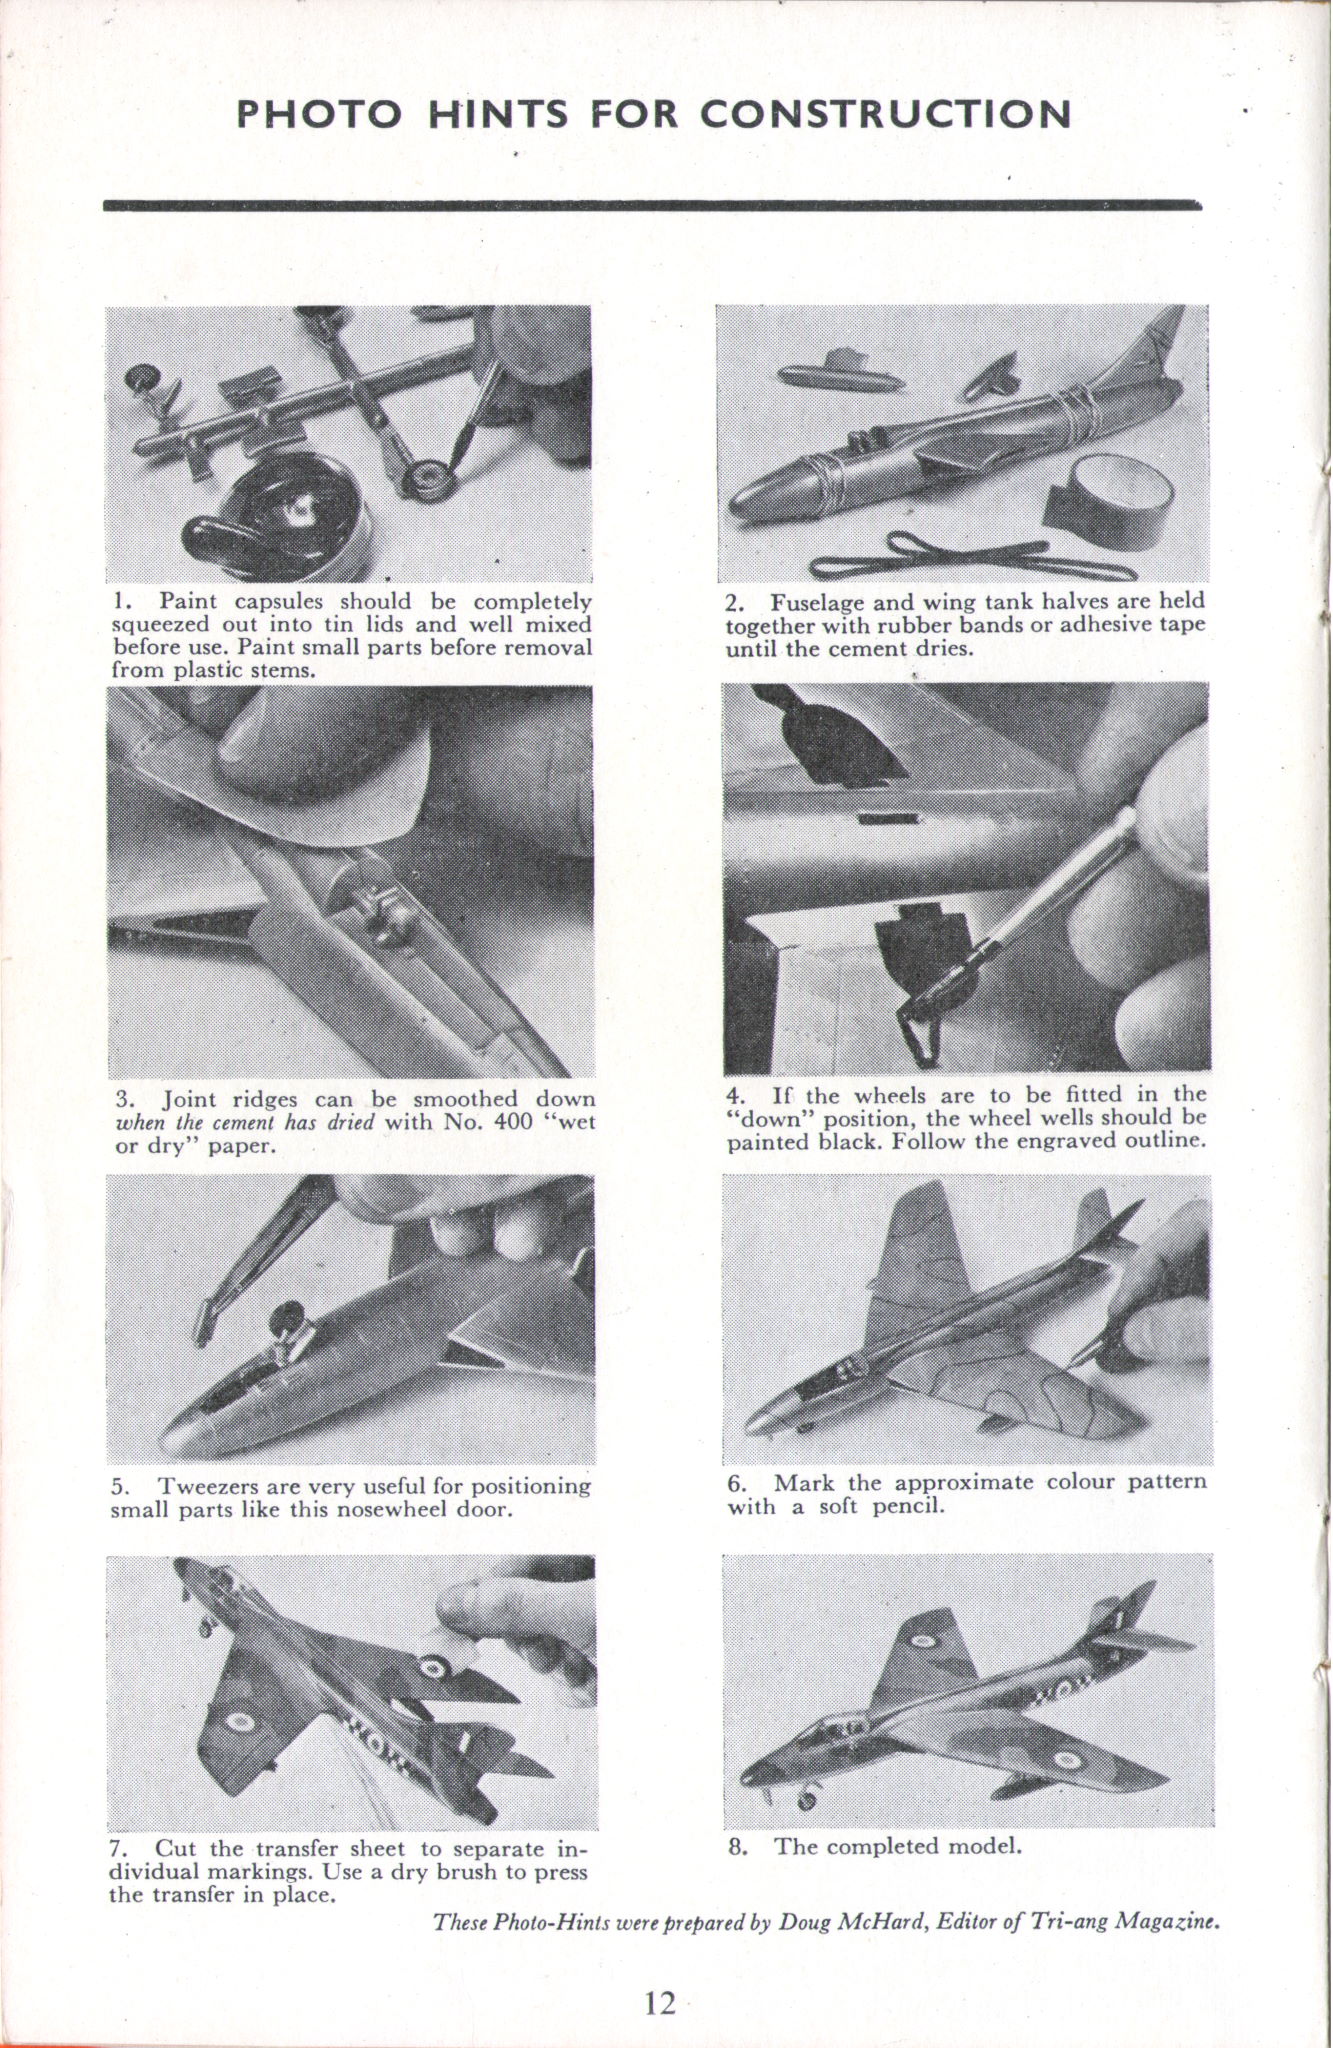 FROG The Attackers Series F144 Hawker Hunter, International Model Aircraft Ltd, 1965, буклет, фото-подсказки для сборки